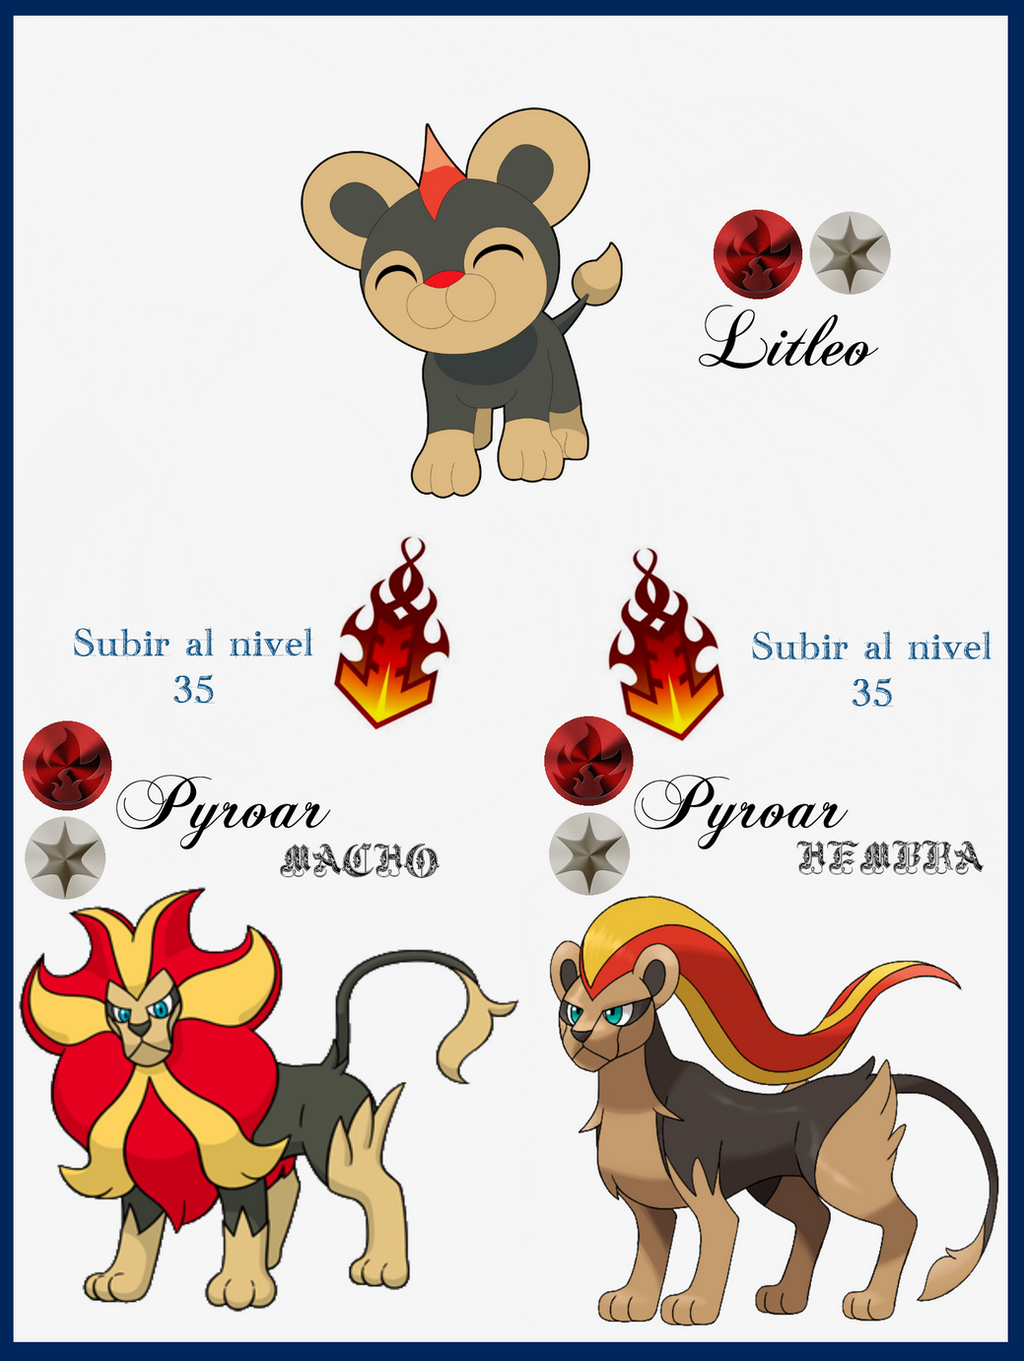 Gible Pokemon Evolution Chart